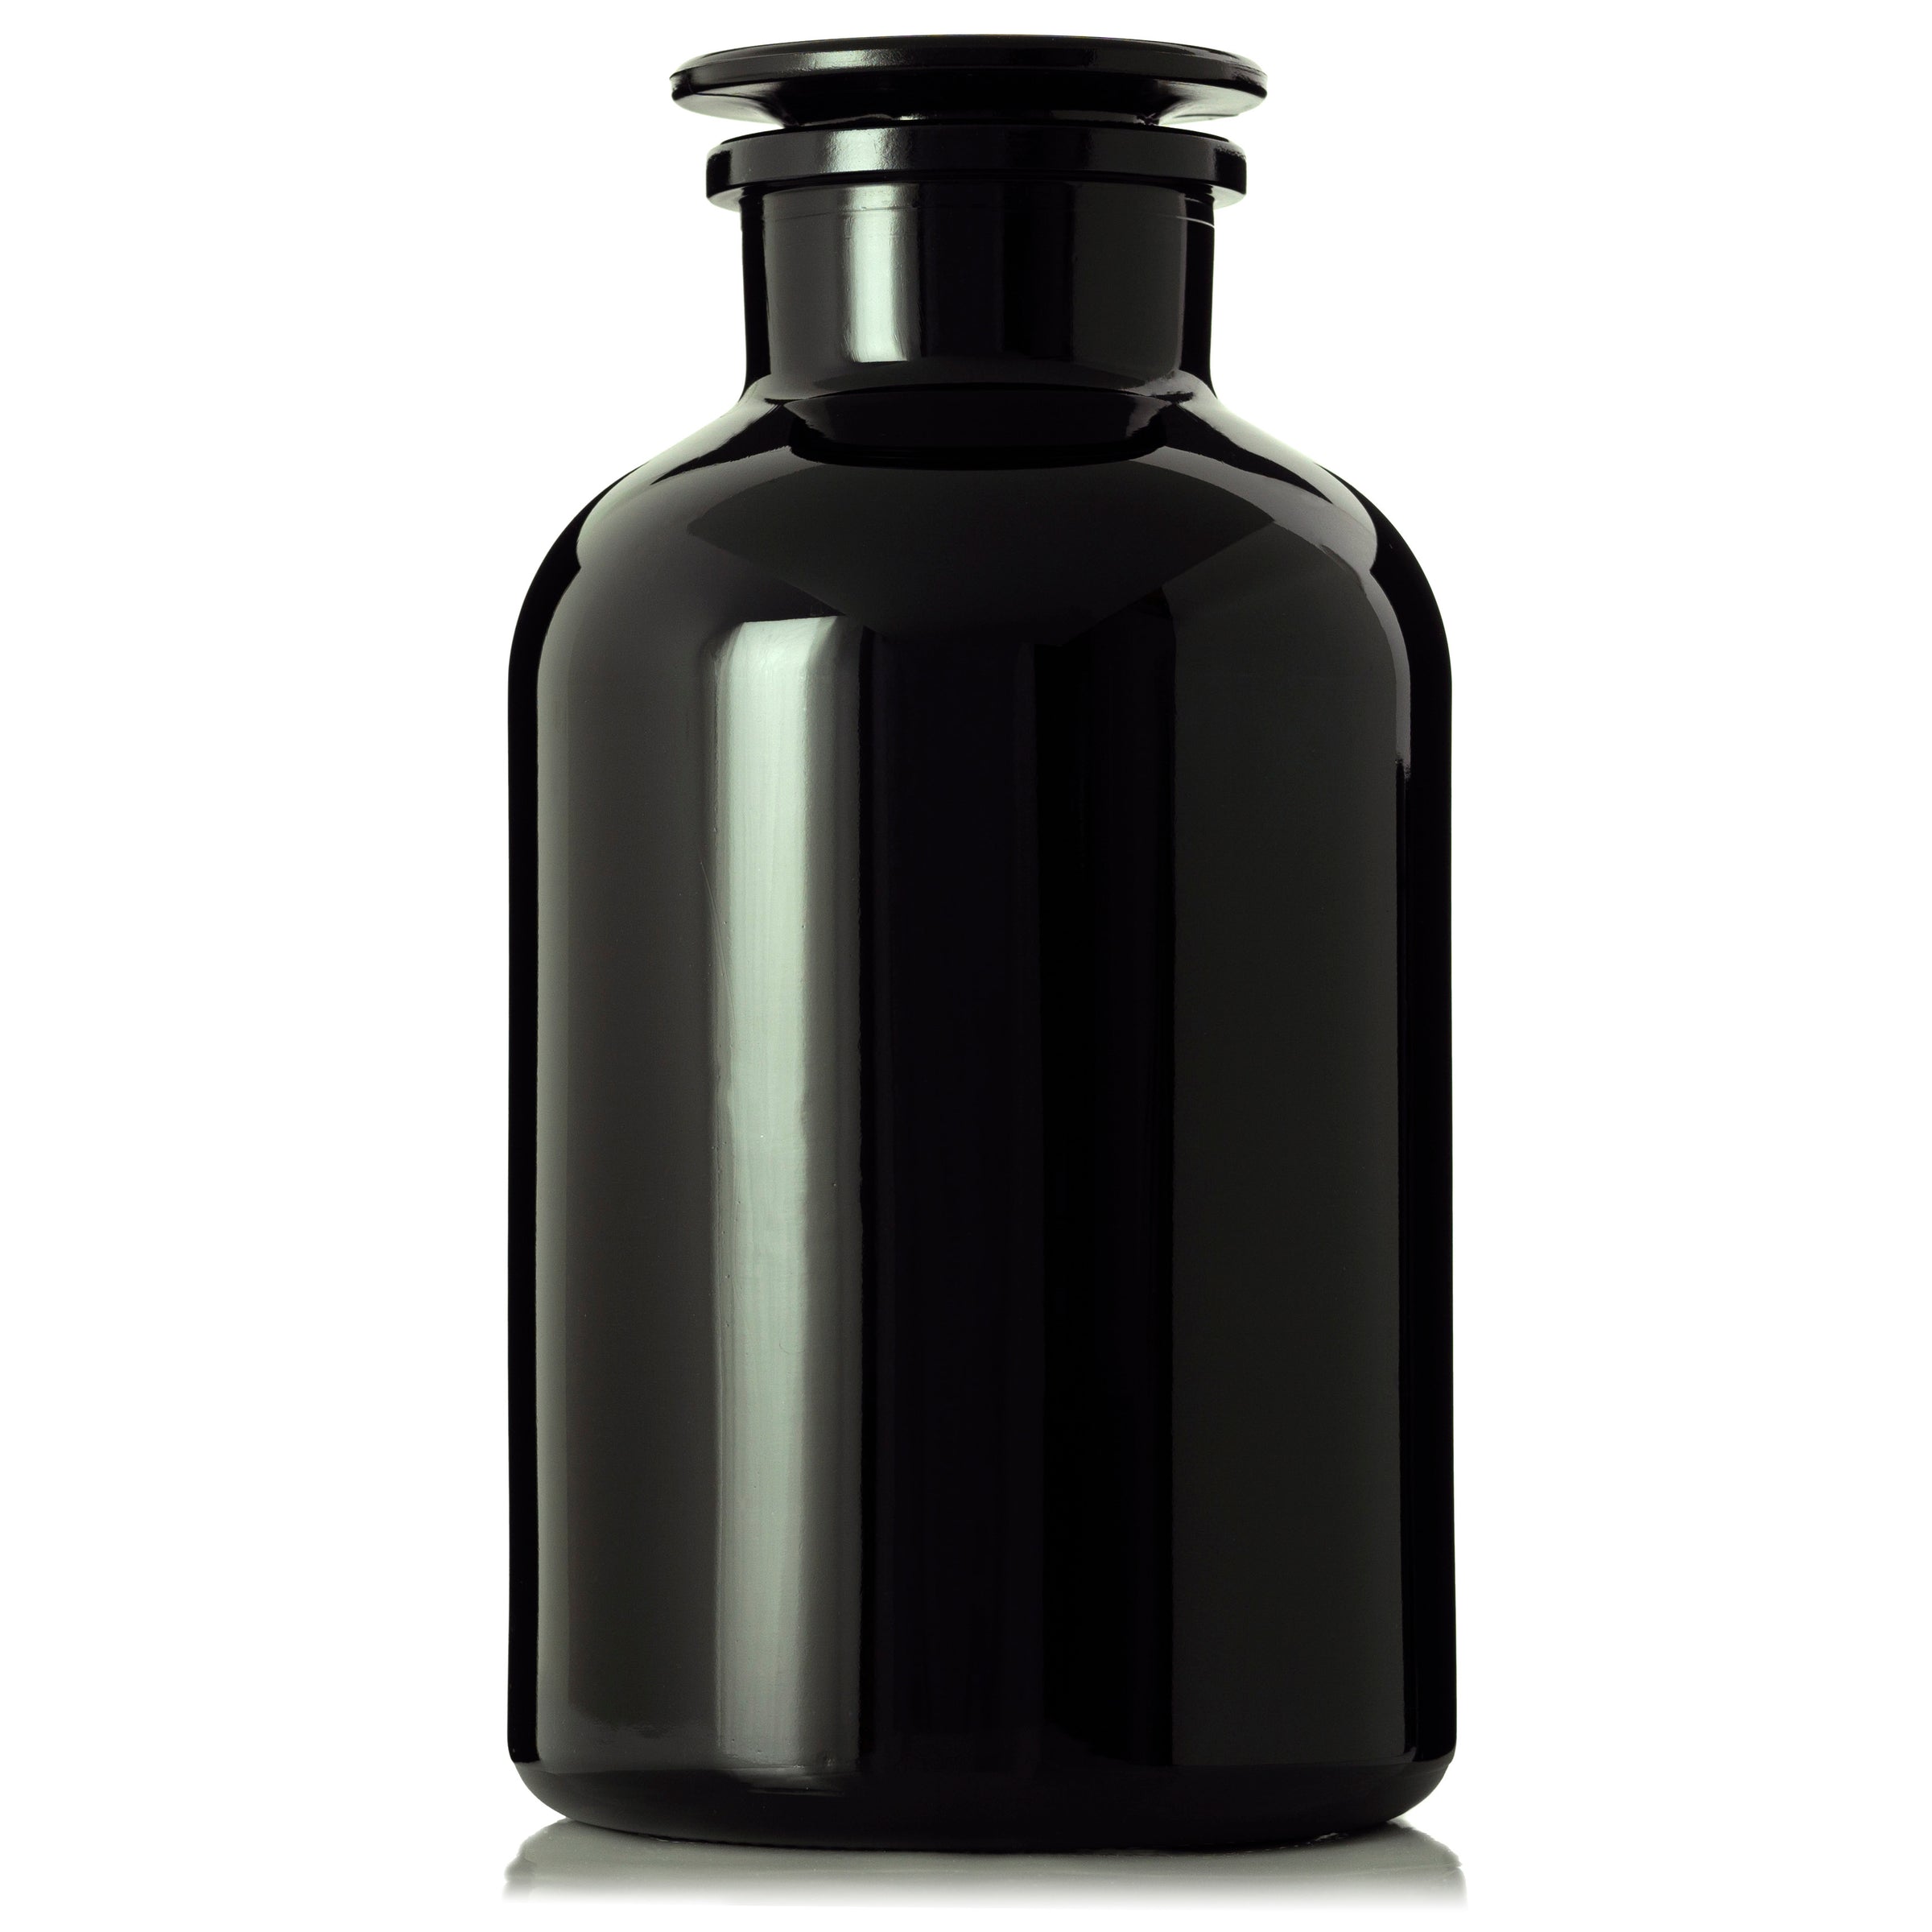 2 Liter Ultraviolet Black Glass Apothecary Jar – Artanis Home